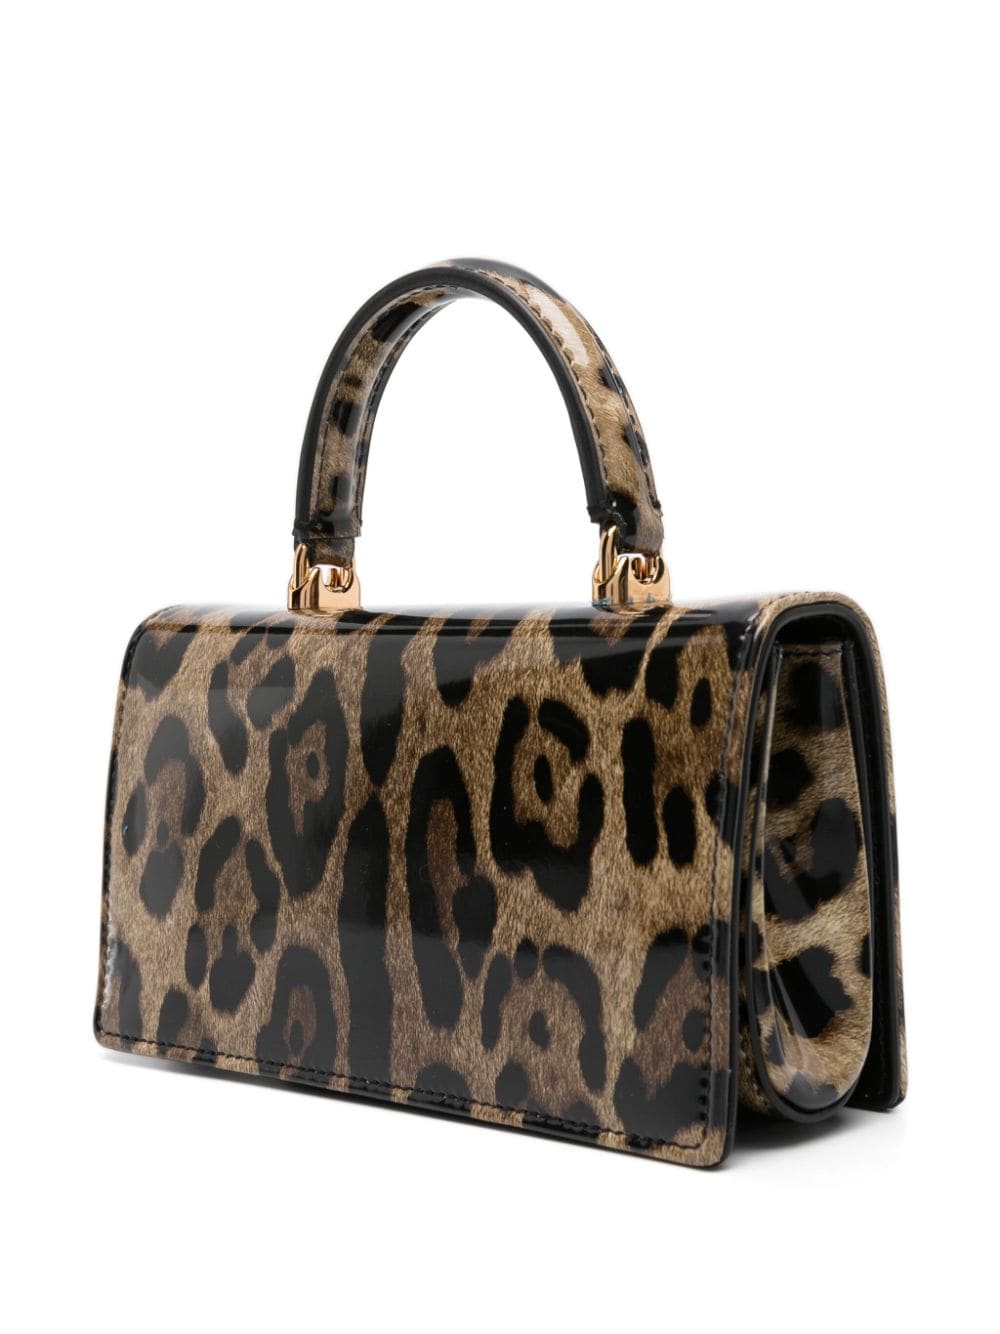 DOLCE & GABBANA DG Girls Leopard-Print Crossbody Handbag in Brown Patent Leather - FW23